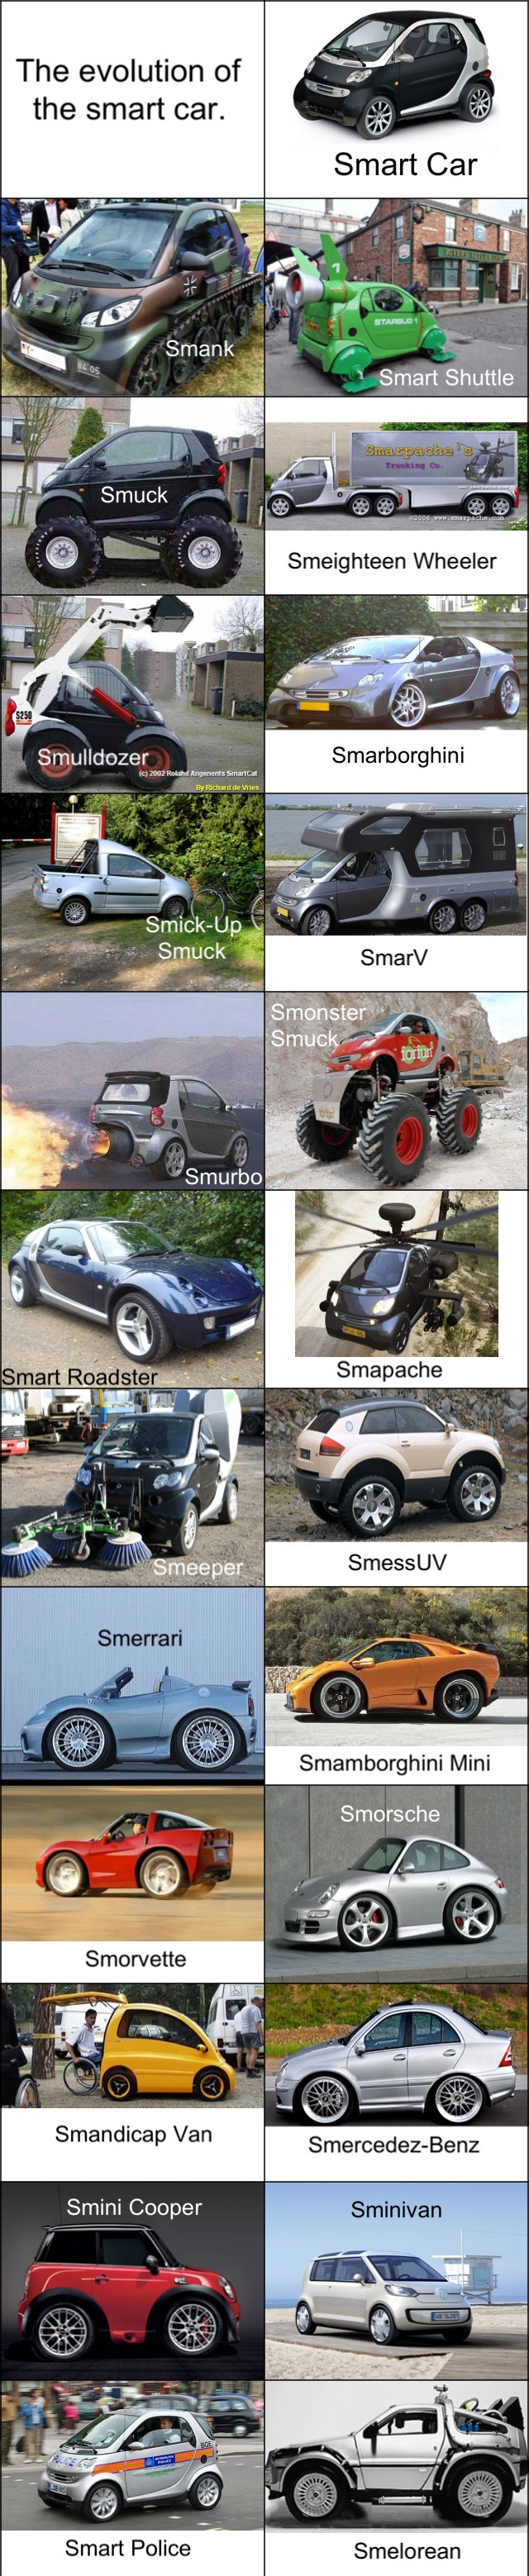 evolution of the smart car - The evolution of Smart Car